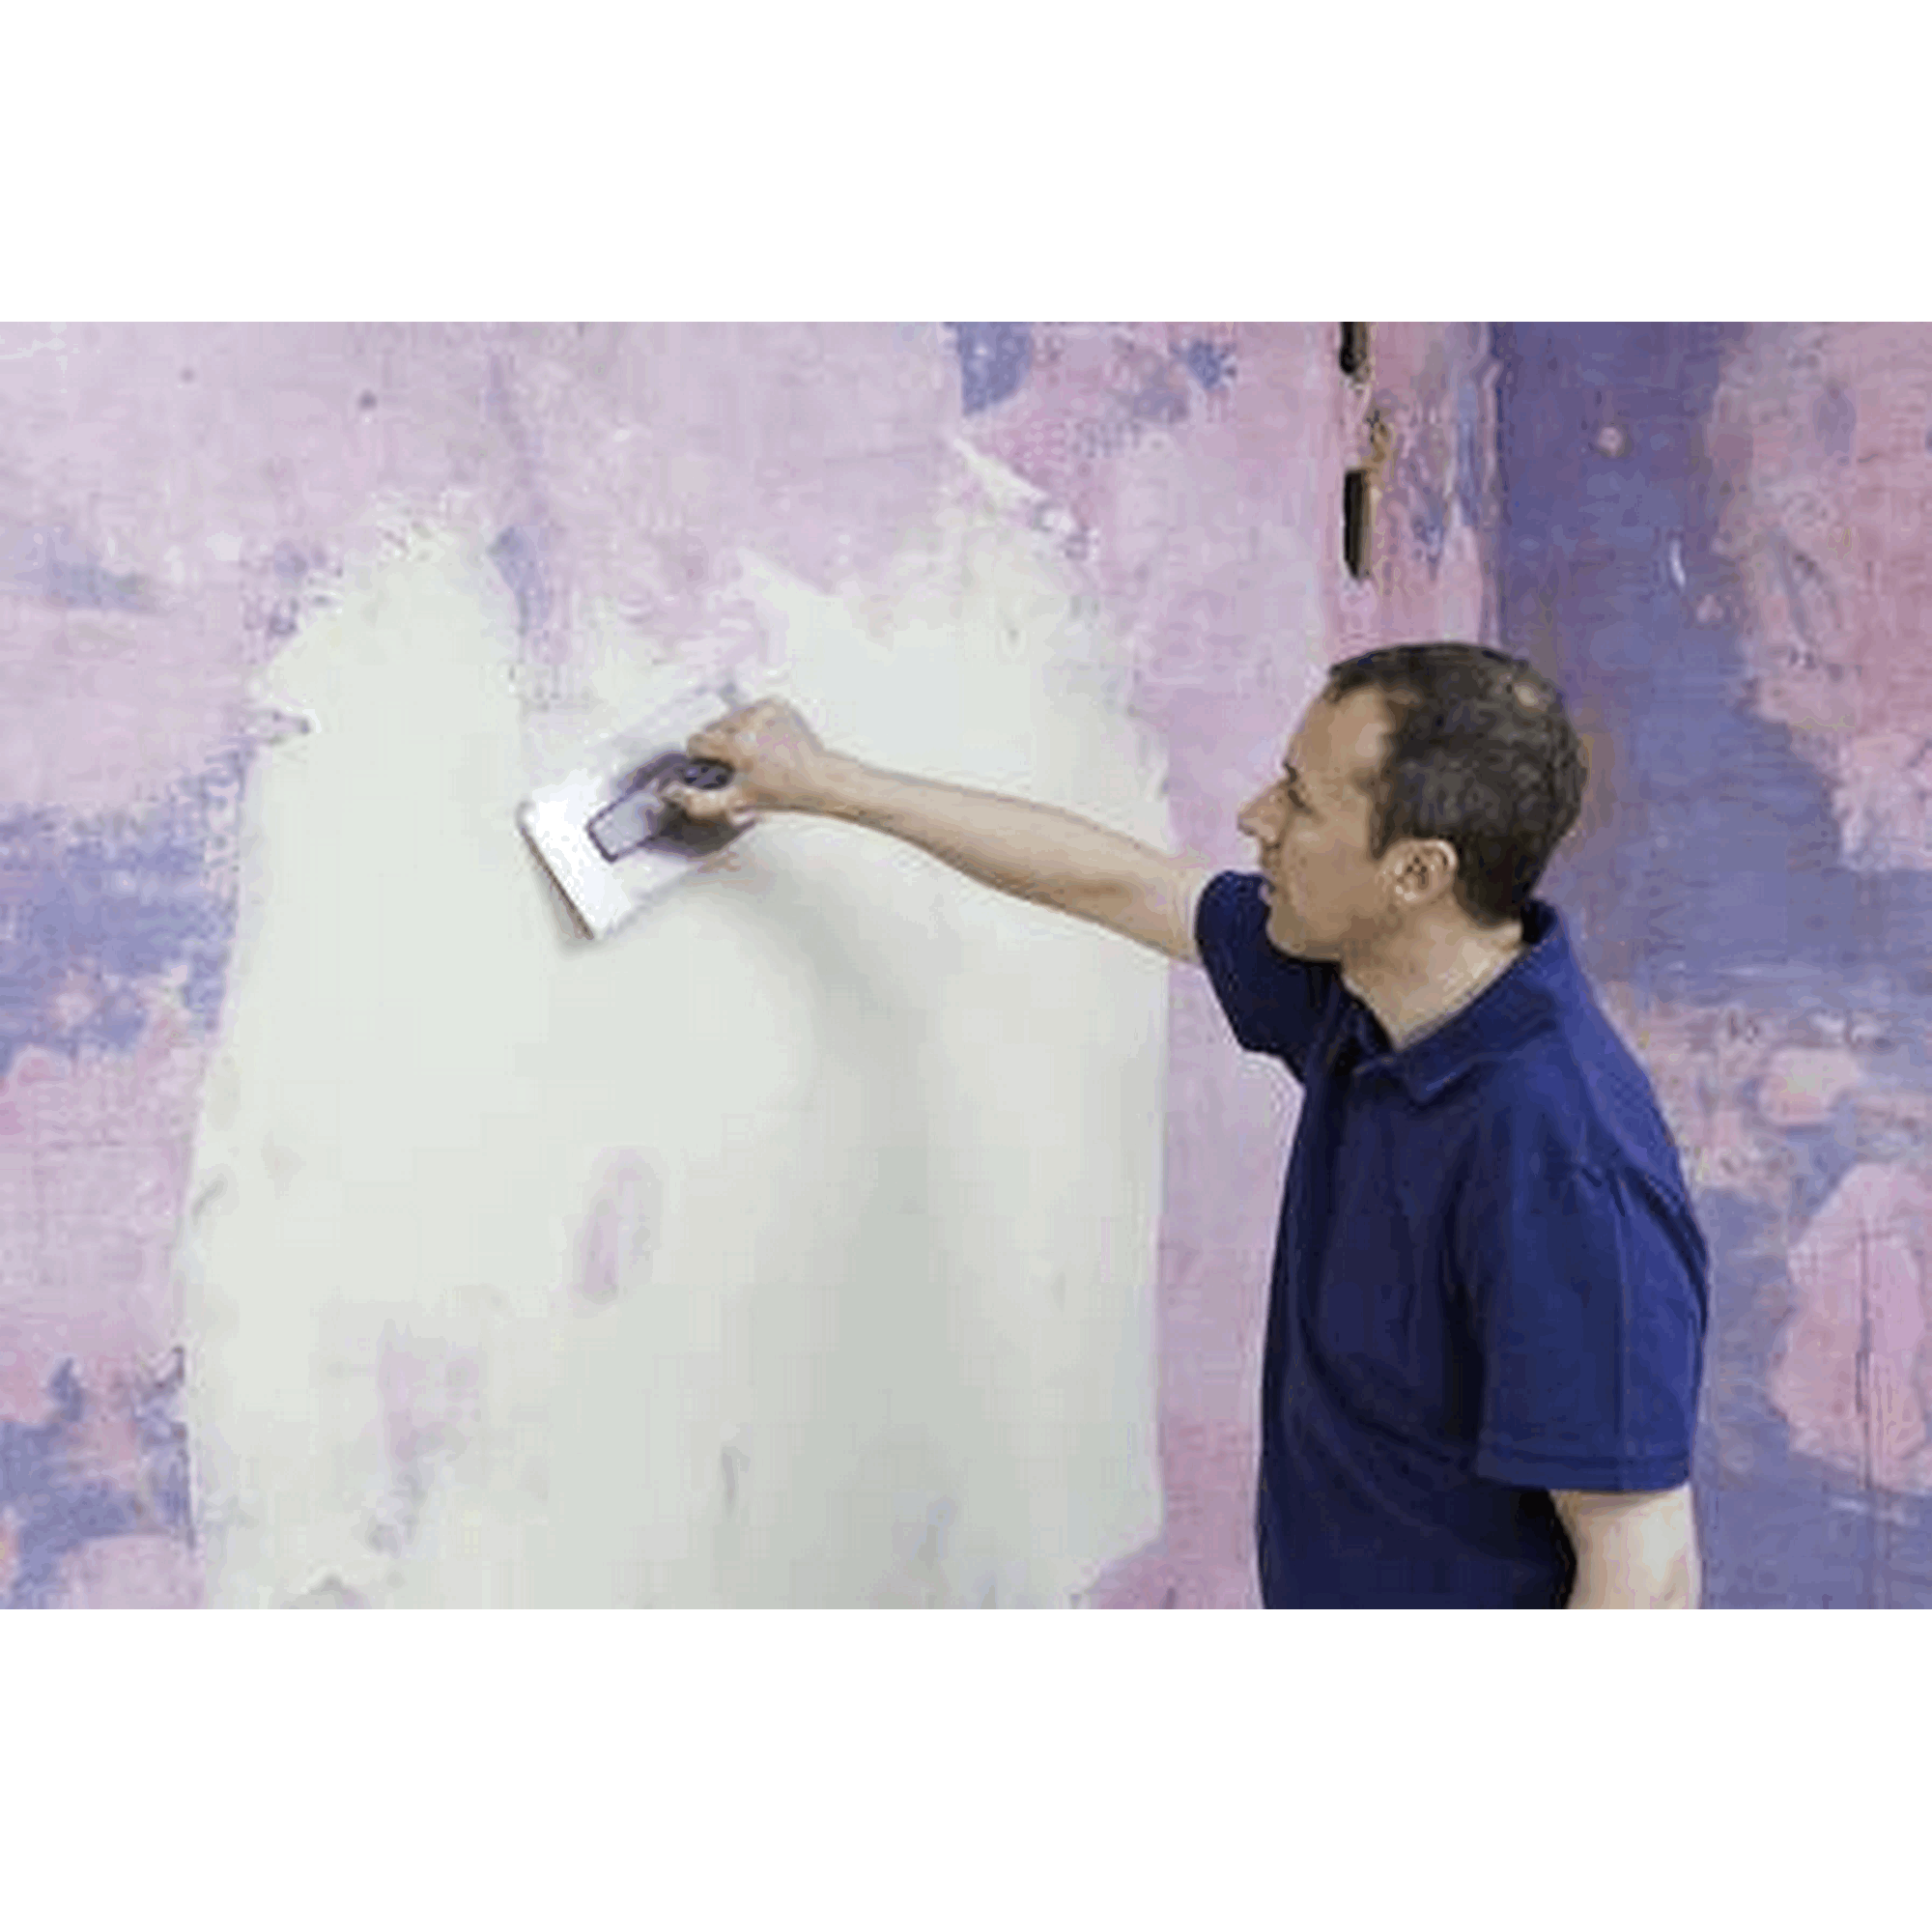 Подготовка поверхности обоям. Шпаклевка стен. Краска для стен. Шпаклёвка стен под покраску. Покраска стен шпаклевкой.